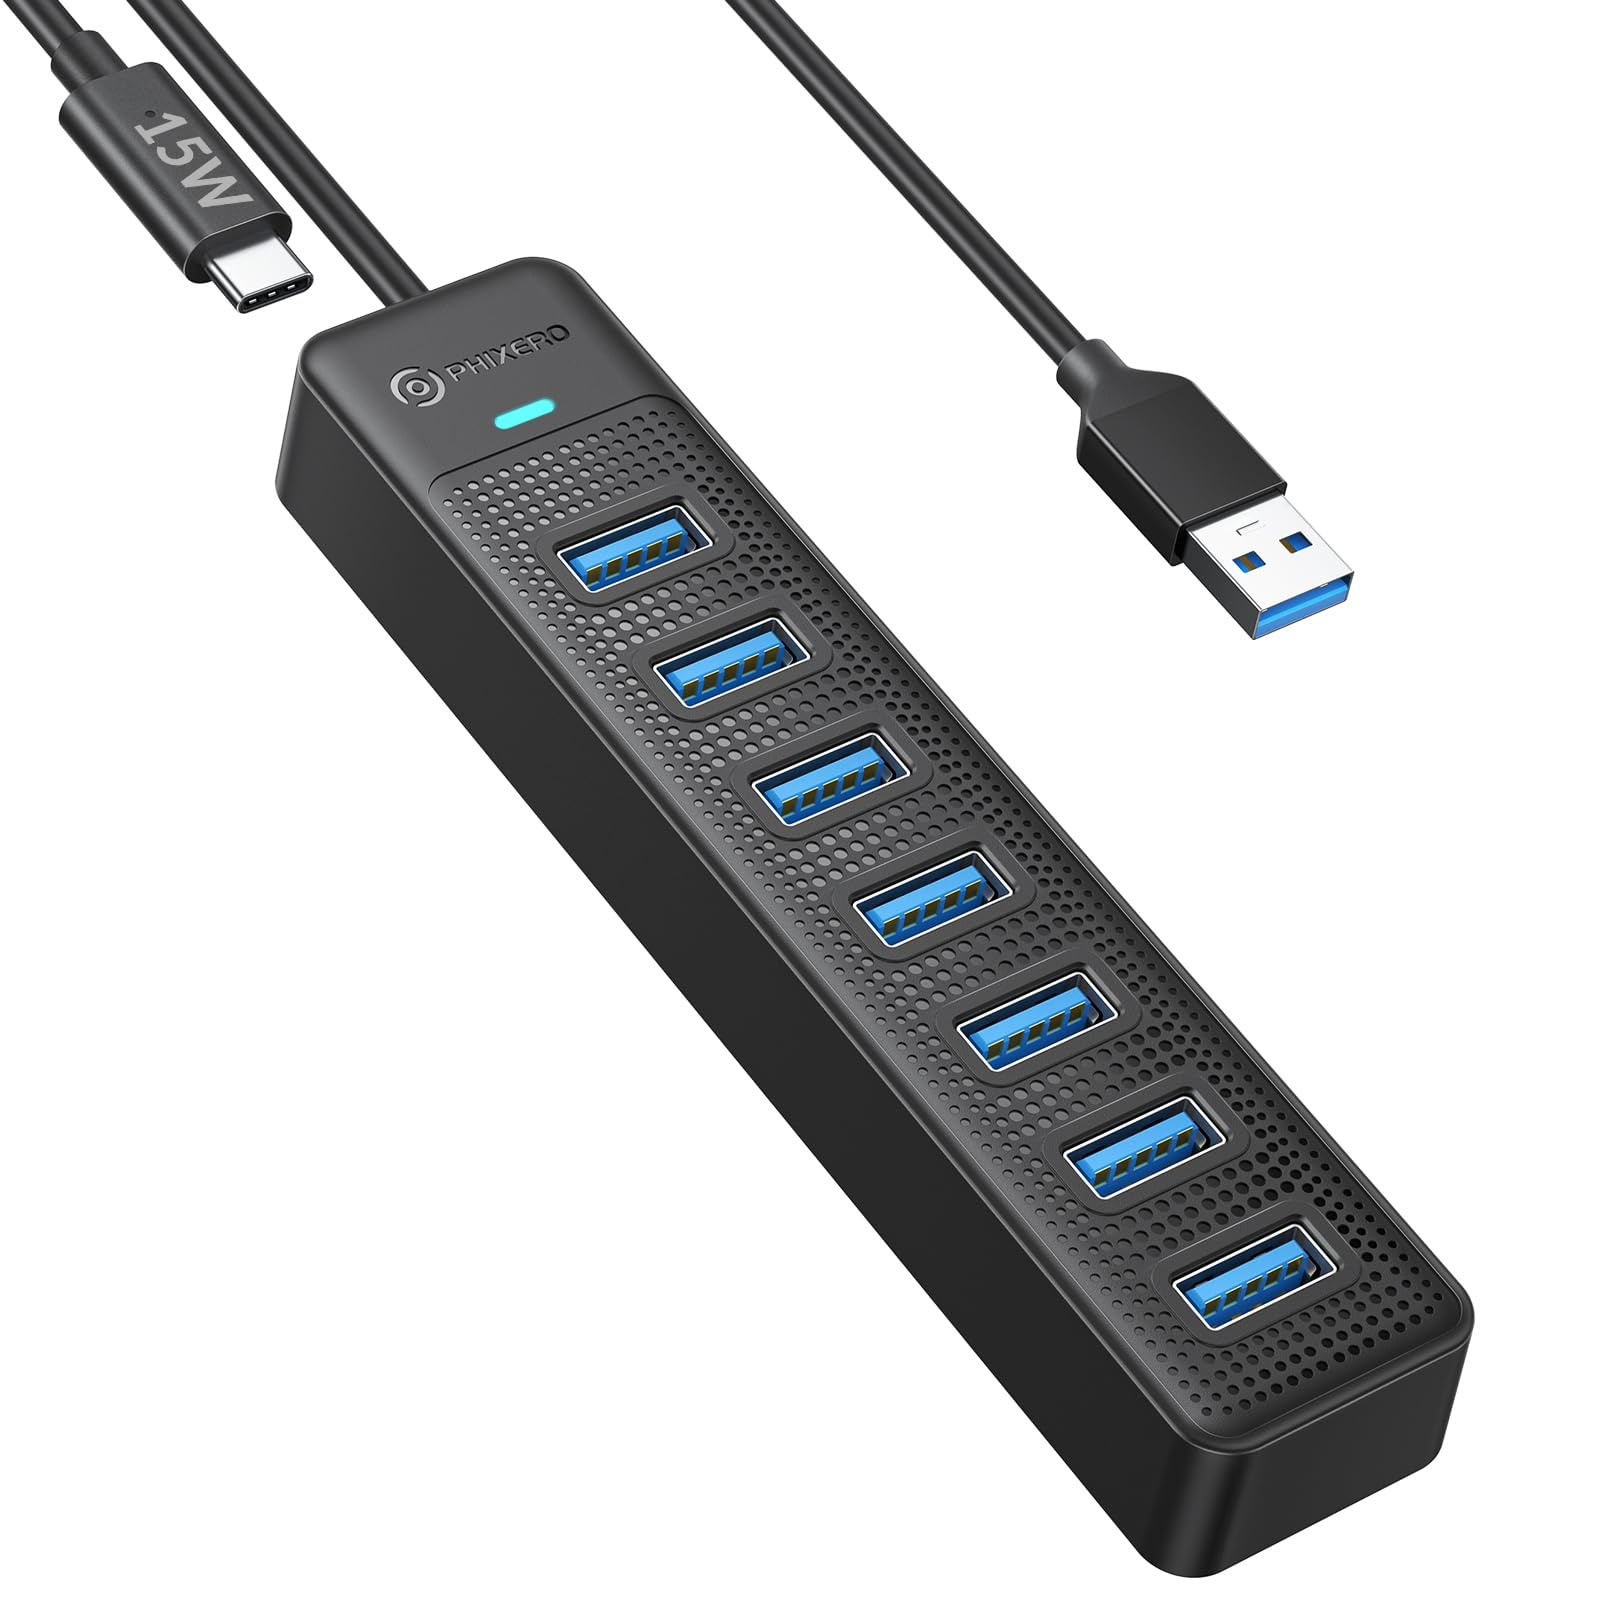 PHIXERO 7 Port USB Hub, USB 3.0 Hub USB Verteiler mit 15W USB C Power Port, Super Speed 5Gbps Datenhub, Kompatibel mit Allen USB Port Geräten (15CM Cable, 7 Port)